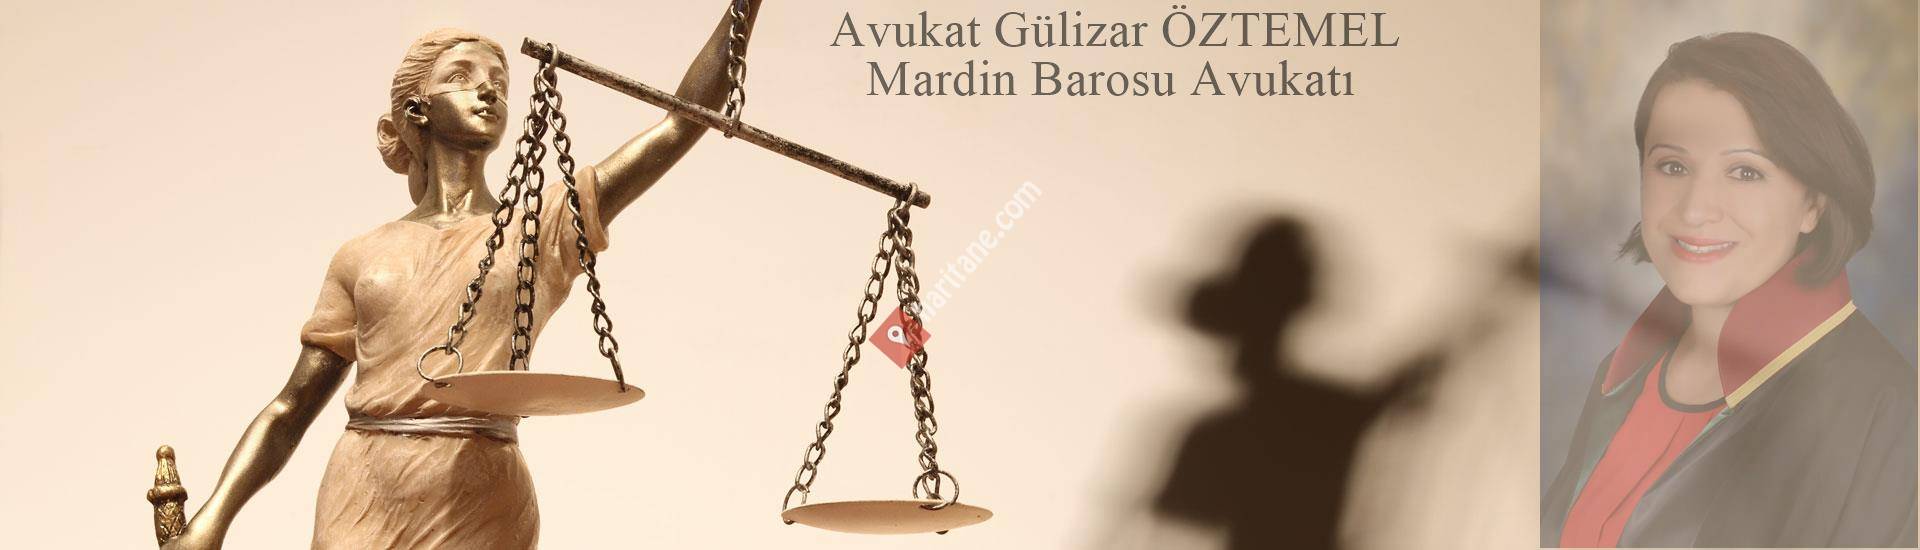 Avukat Gülizar ÖZTEMEL